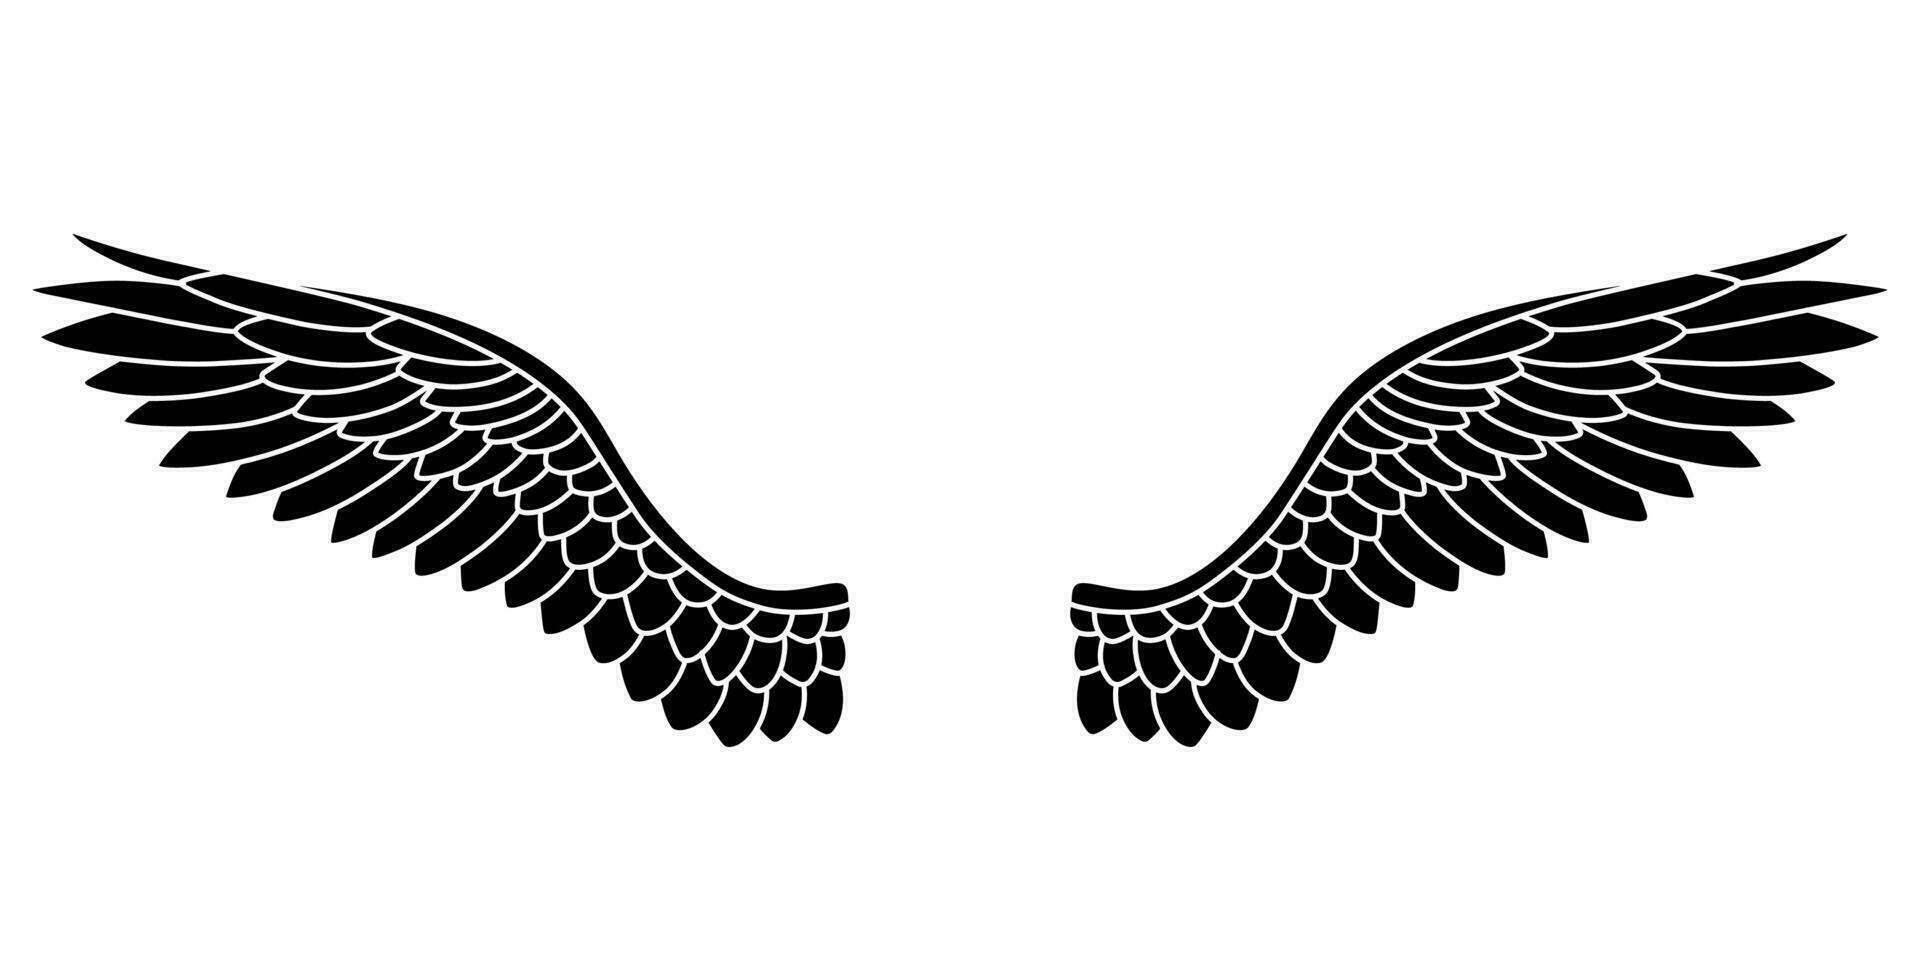 Vector silhouette of angel wings logo